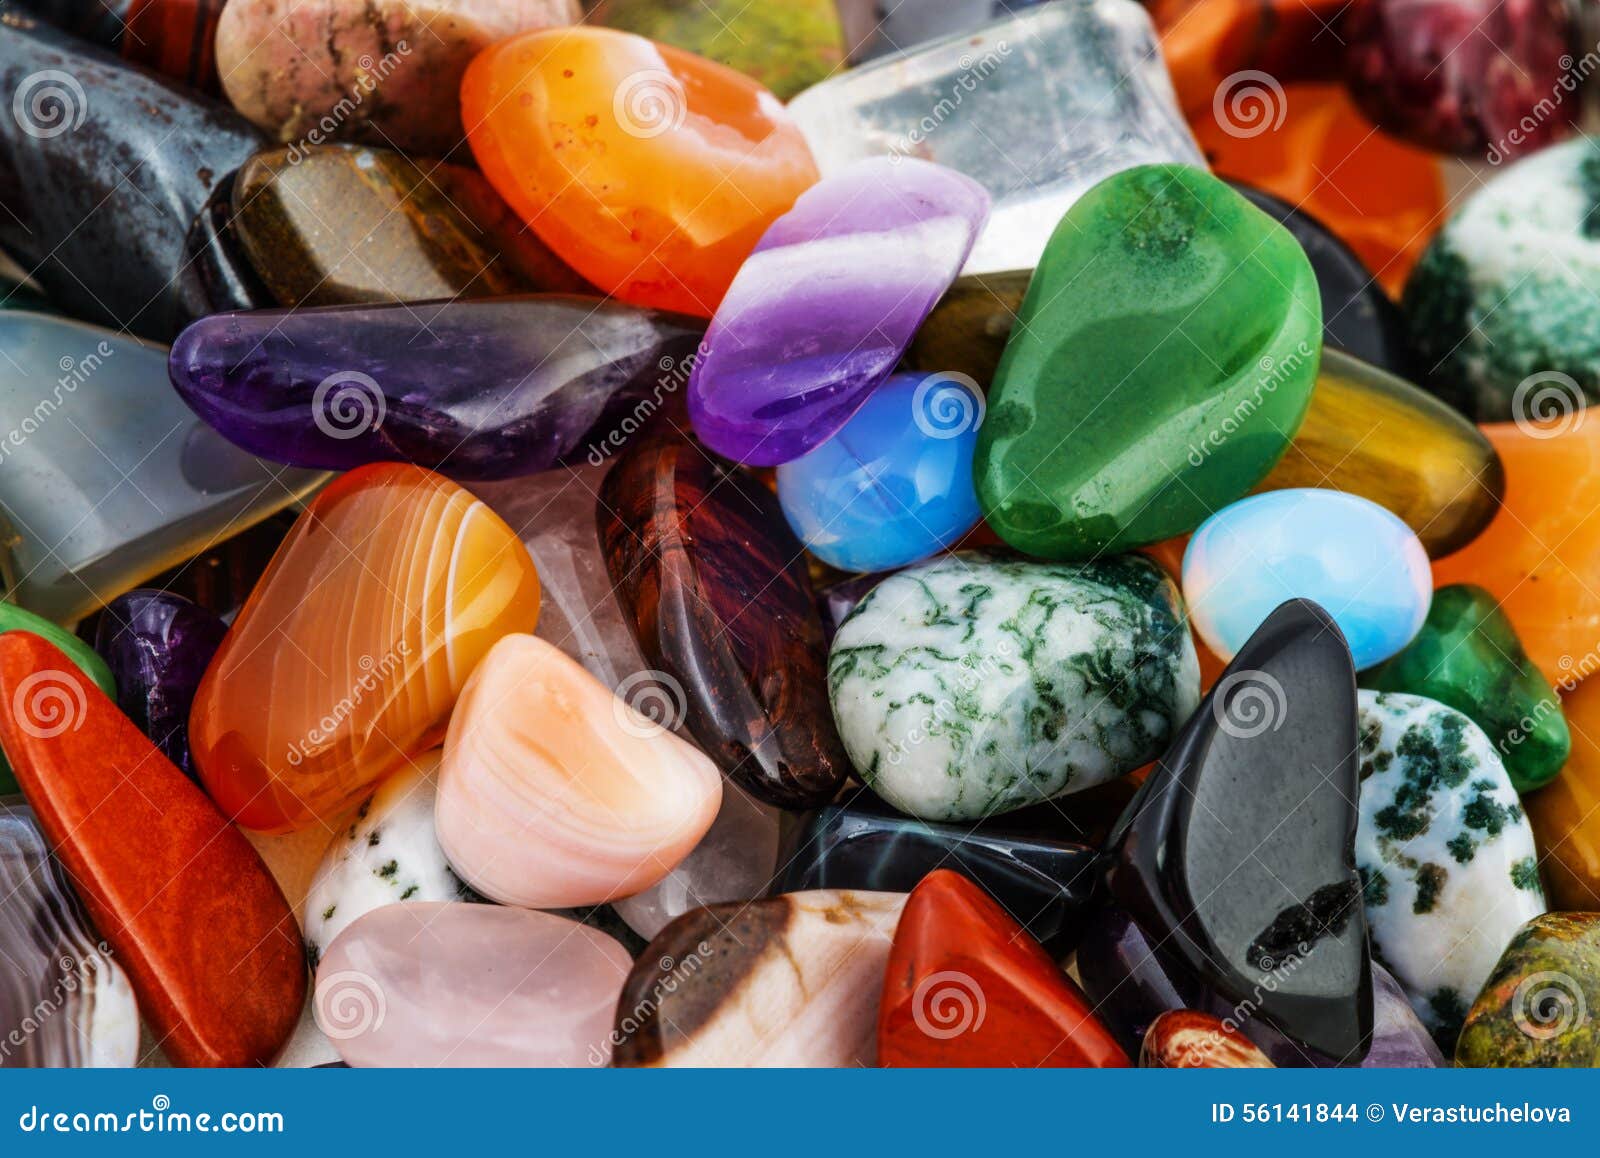 semiprecious natural stones